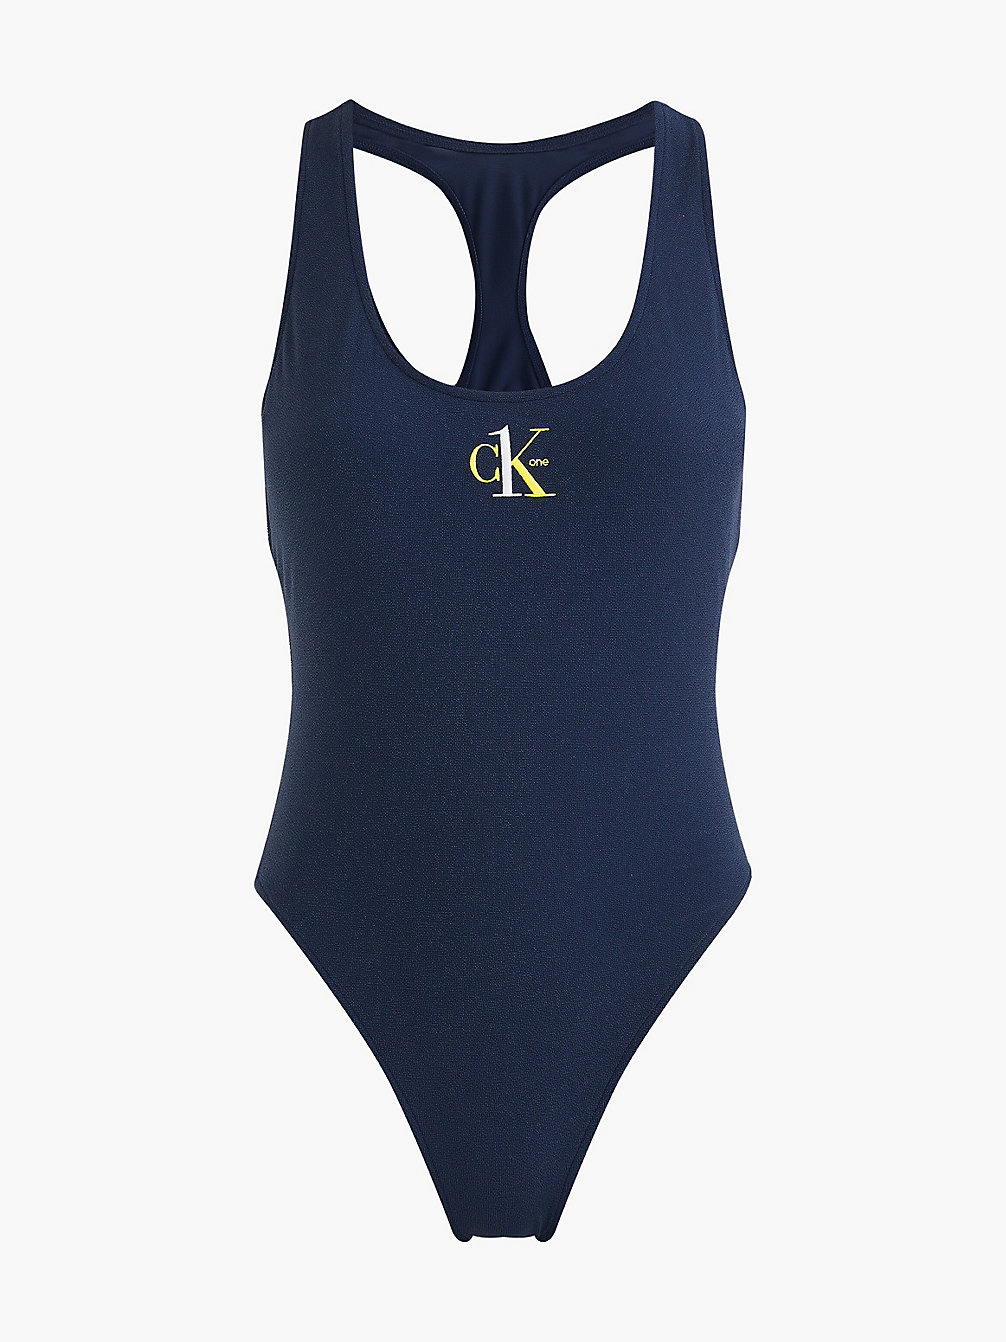 NAVY IRIS Racer Back Swimsuit - CK One undefined women Calvin Klein